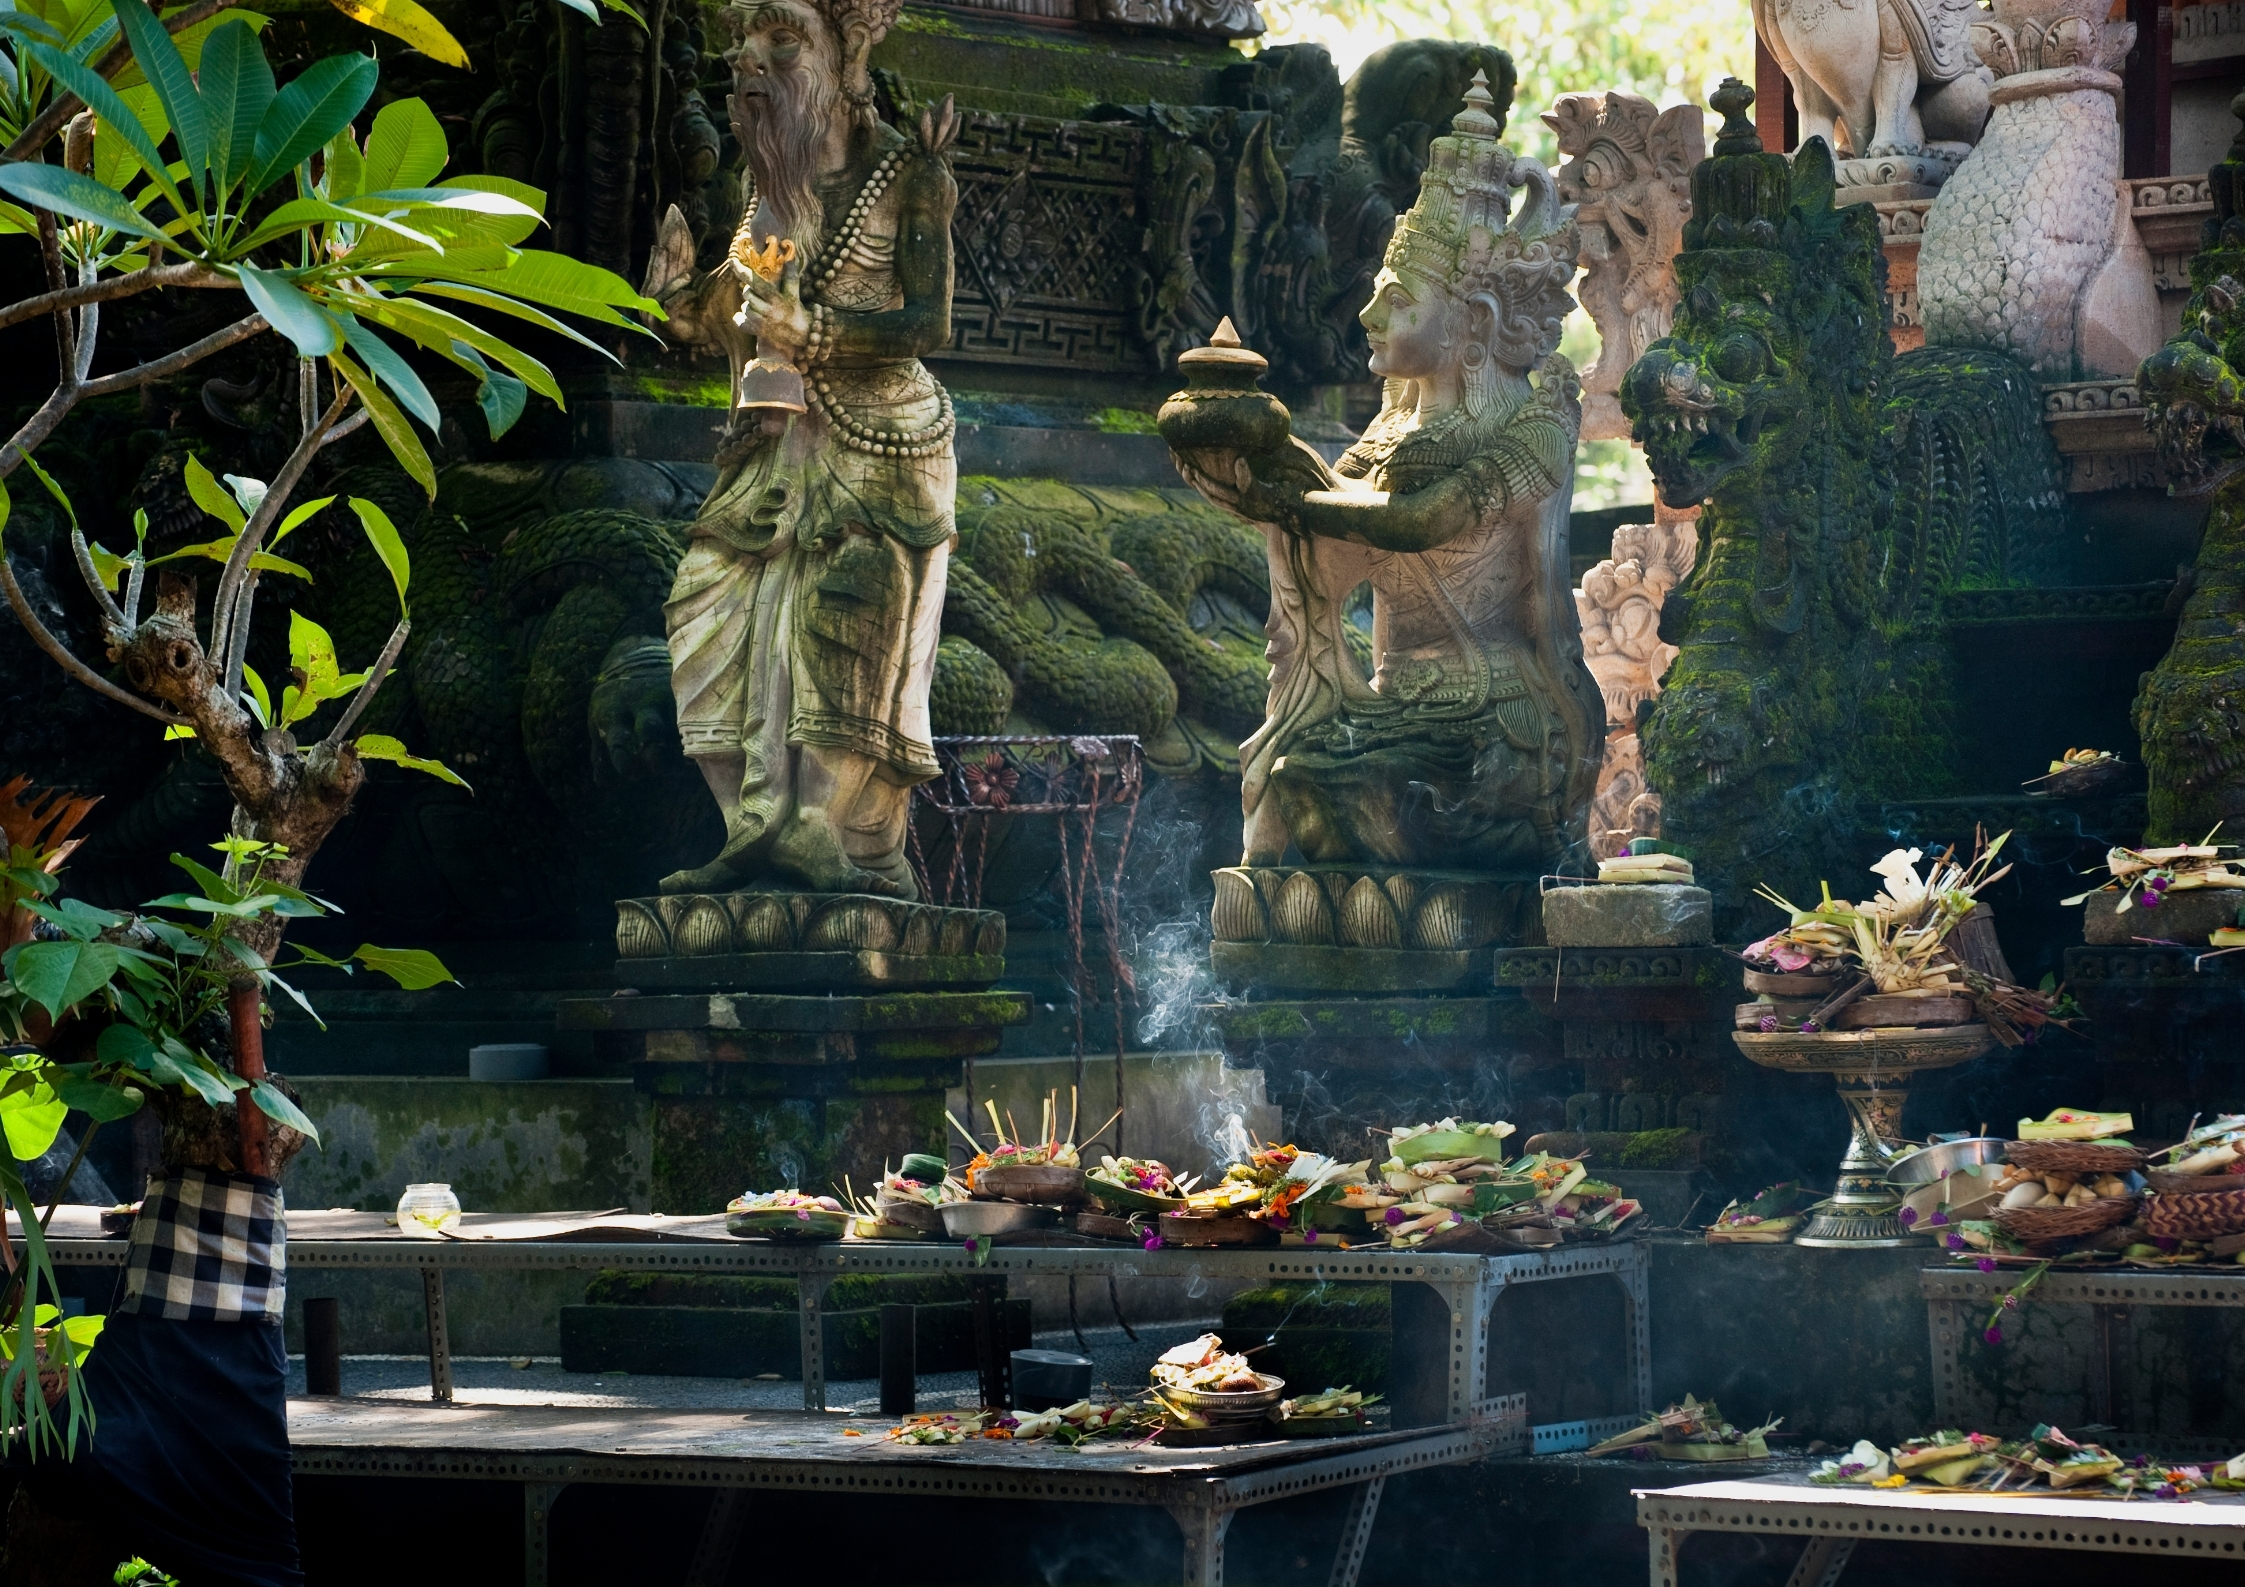 Bali Through My Eyes: 9 Top Experiences In Bali